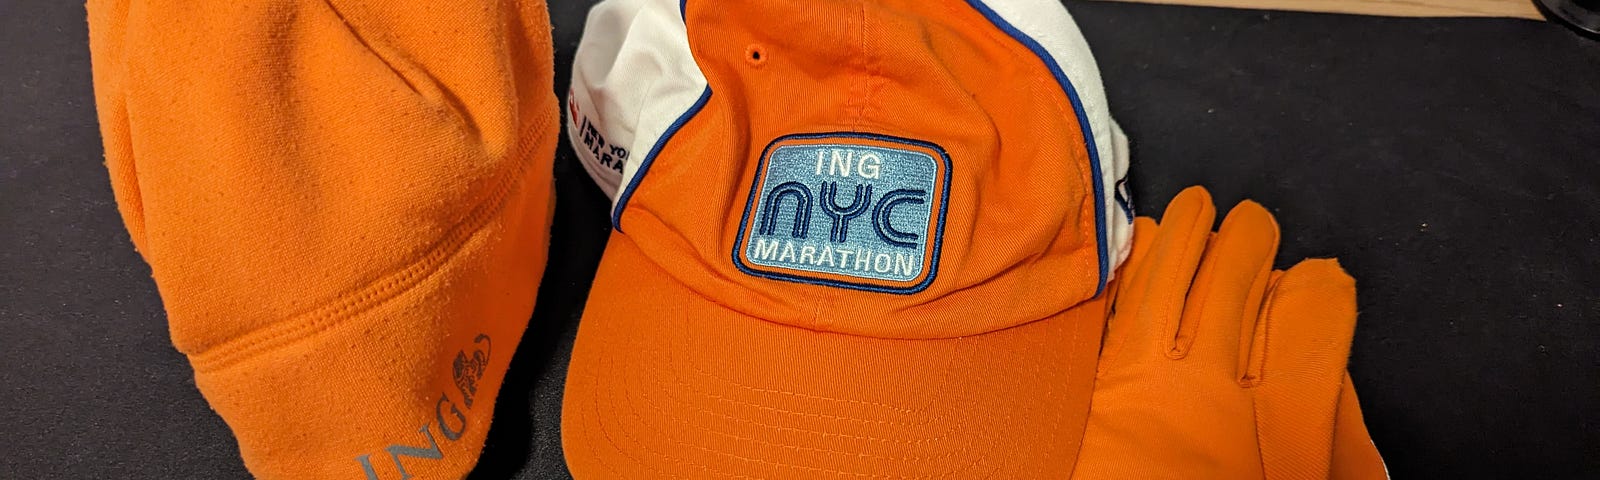 Bright orange winter hat, gloves, and baseball cap from the NYC Marathon